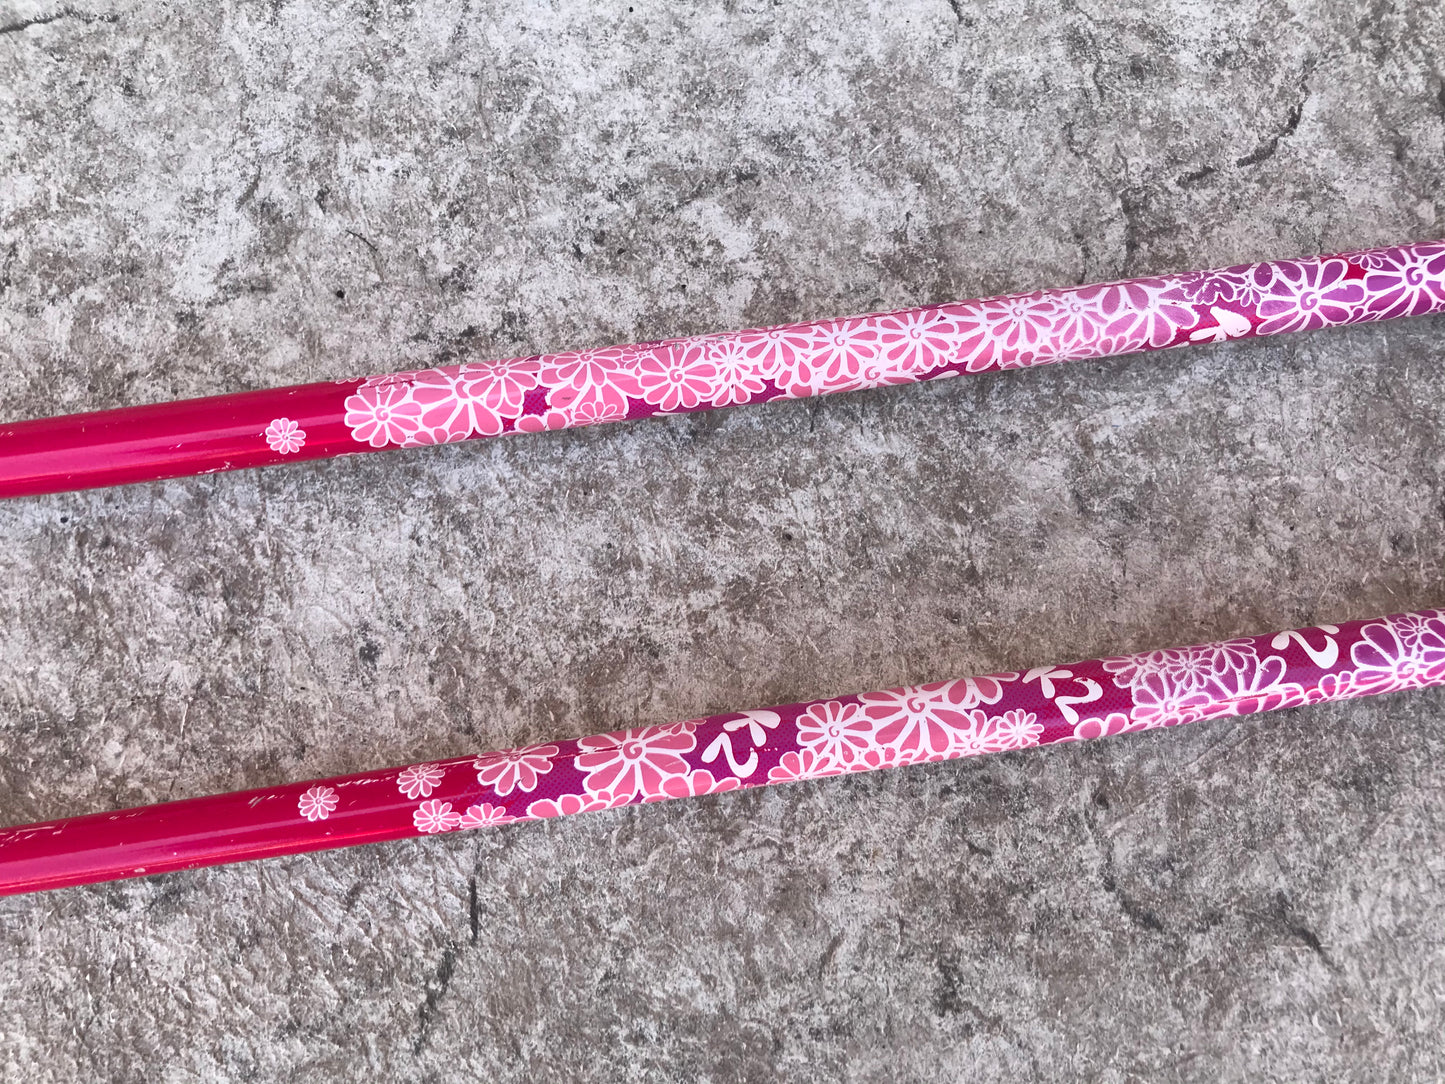 Ski Poles Child Size 30 inch Rossignol Fun Girl Pink Daisy Rubber Grip Handles